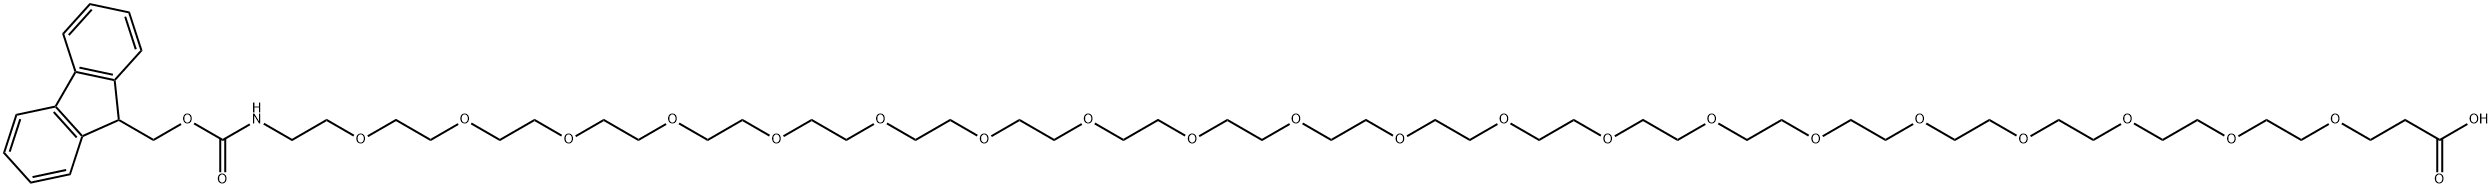 Fmoc-N-amido-PEG20-acid